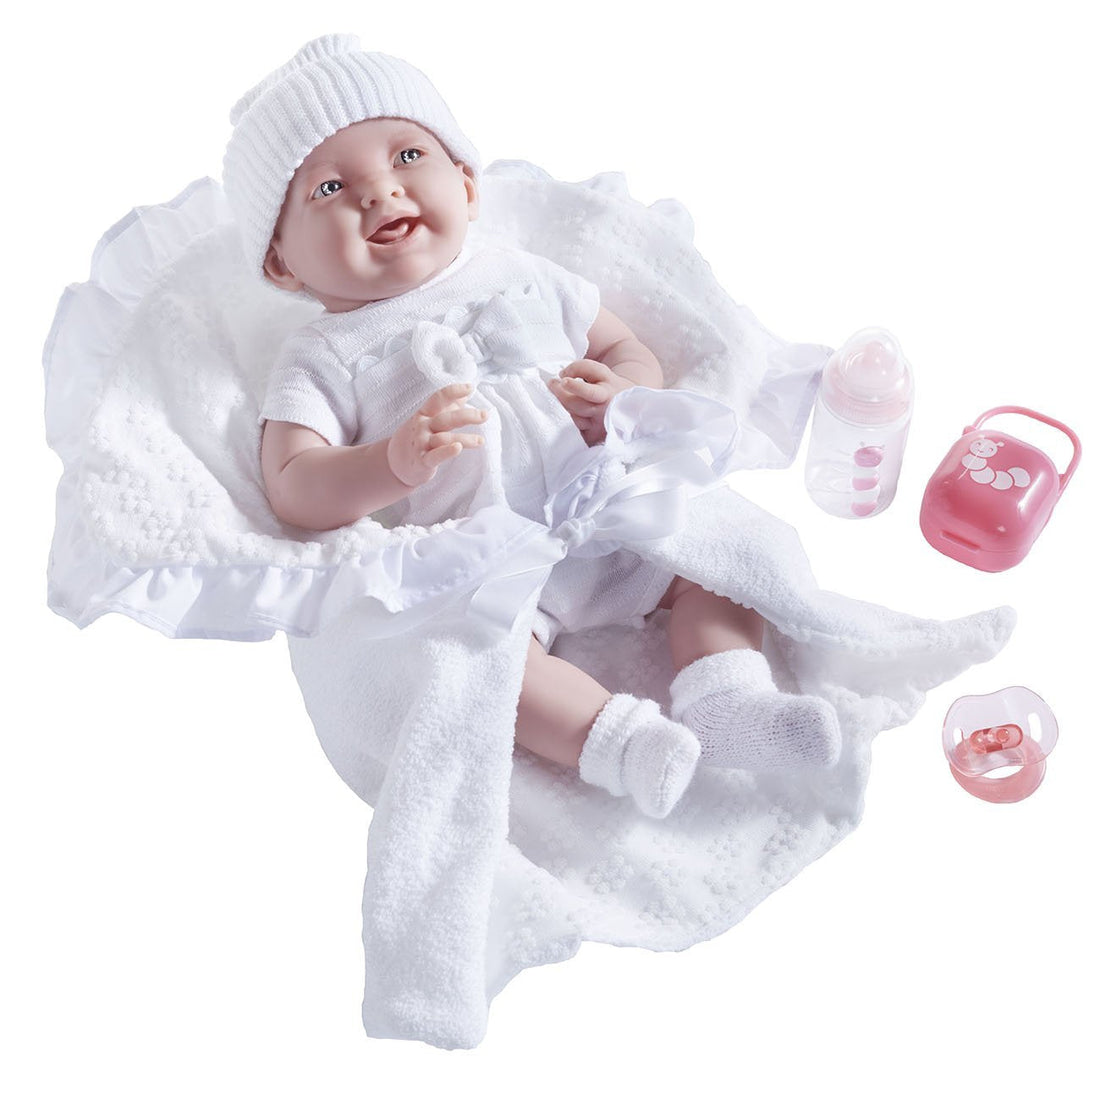 Soft Body La Newborn in White Bunting and Accessories - Dolls and Accessories